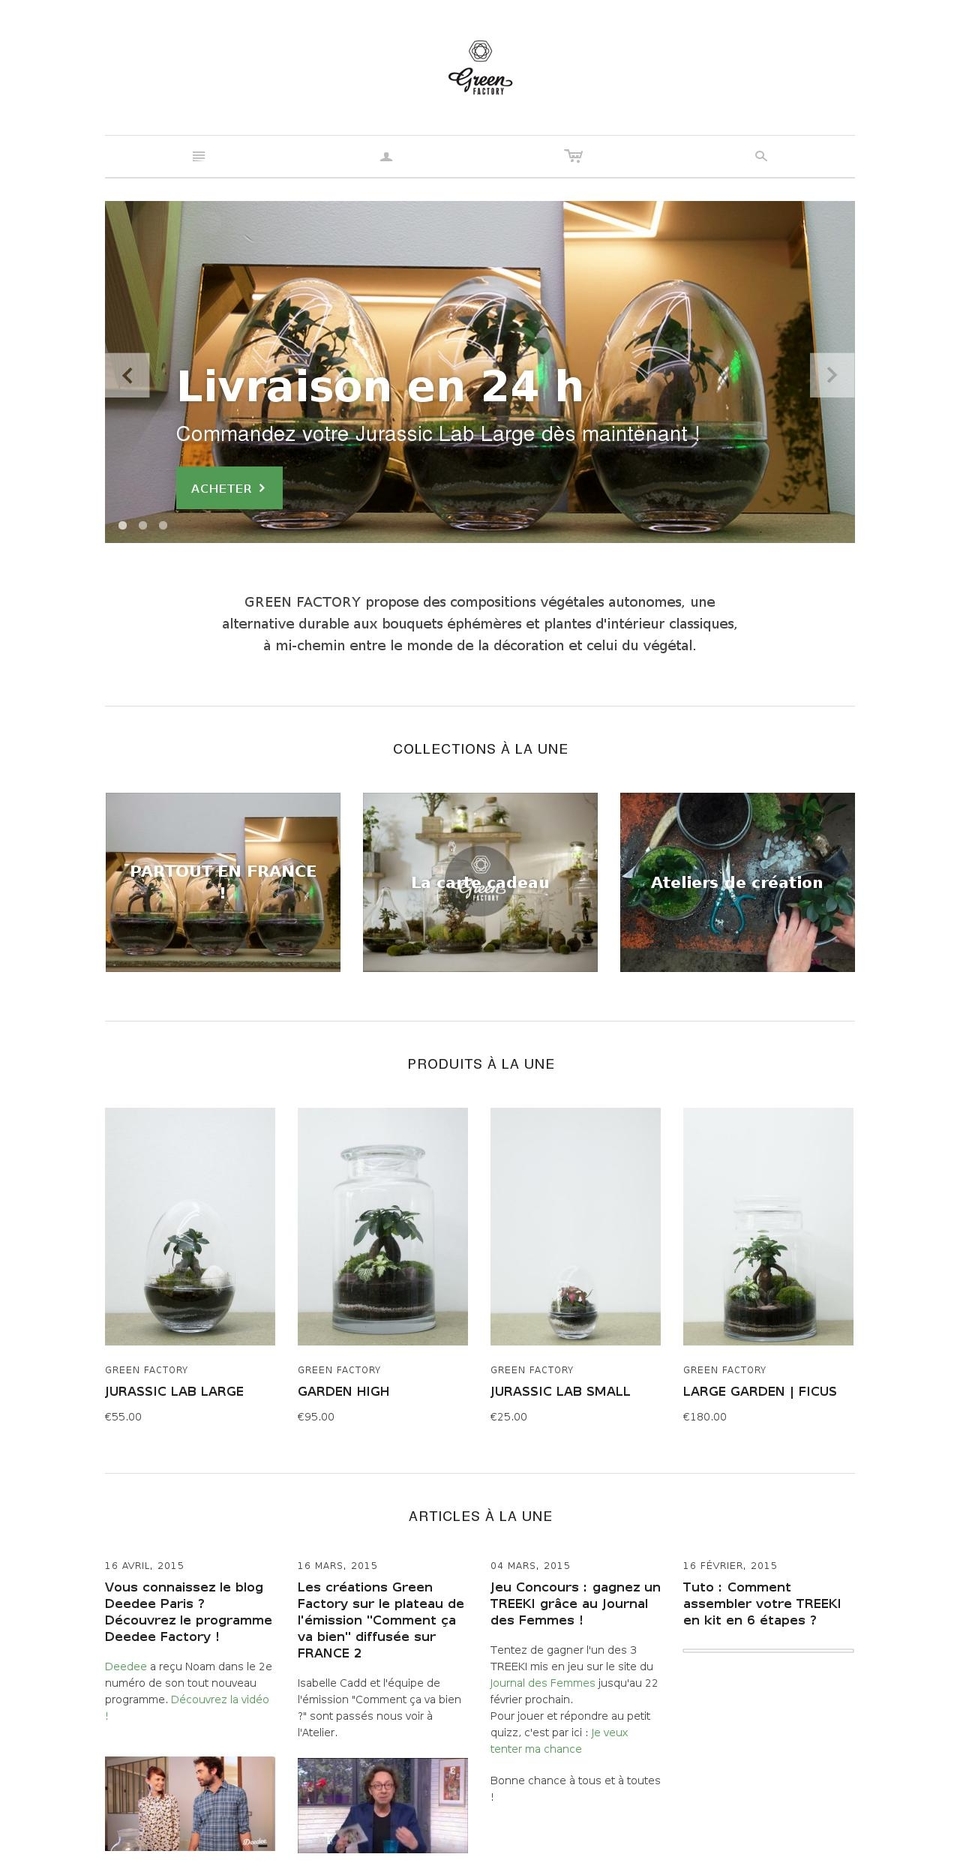 greenfactory.fr shopify website screenshot